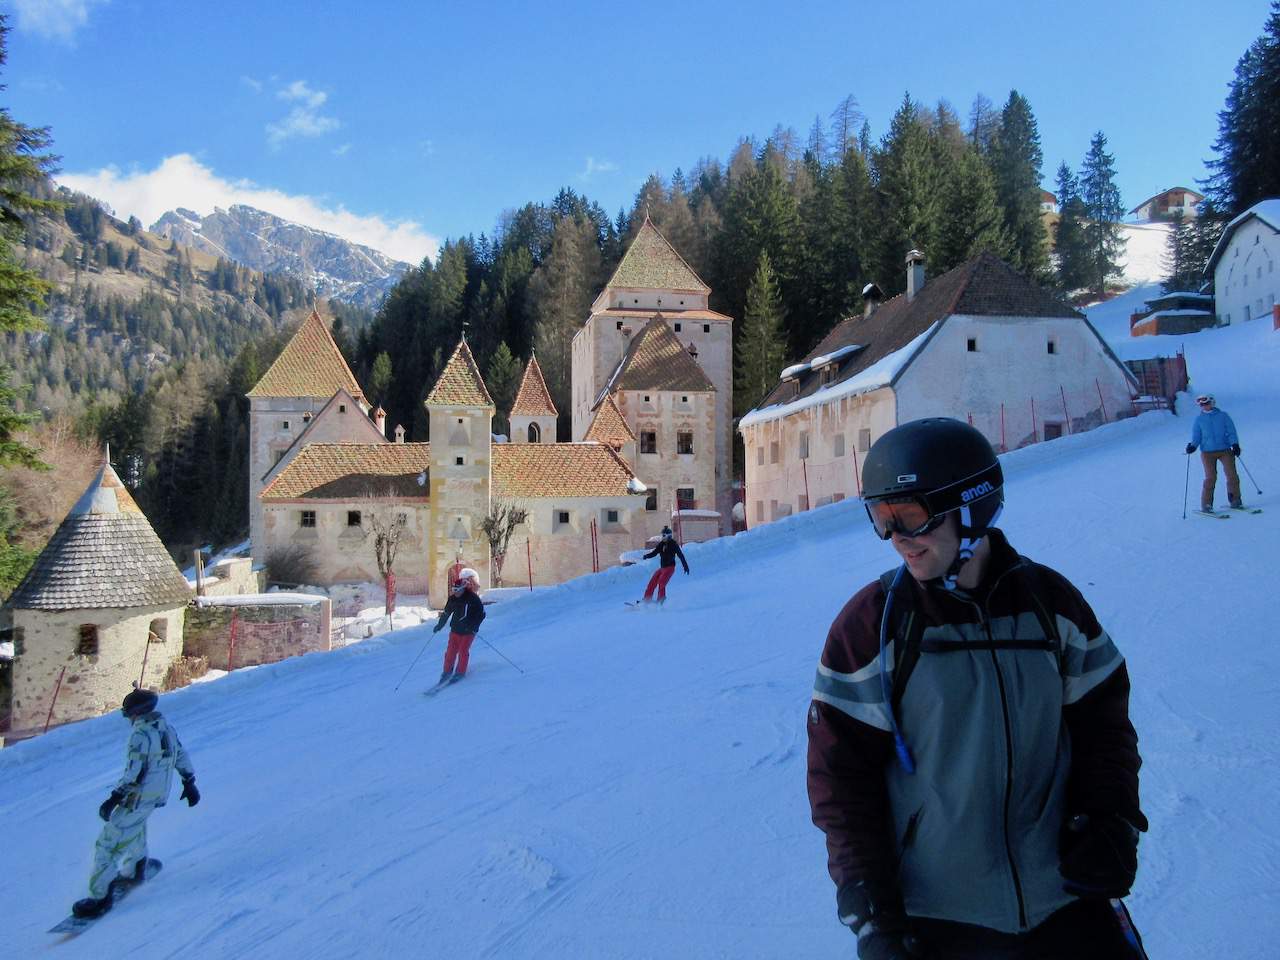 Saslong B ski run in Val Gardena